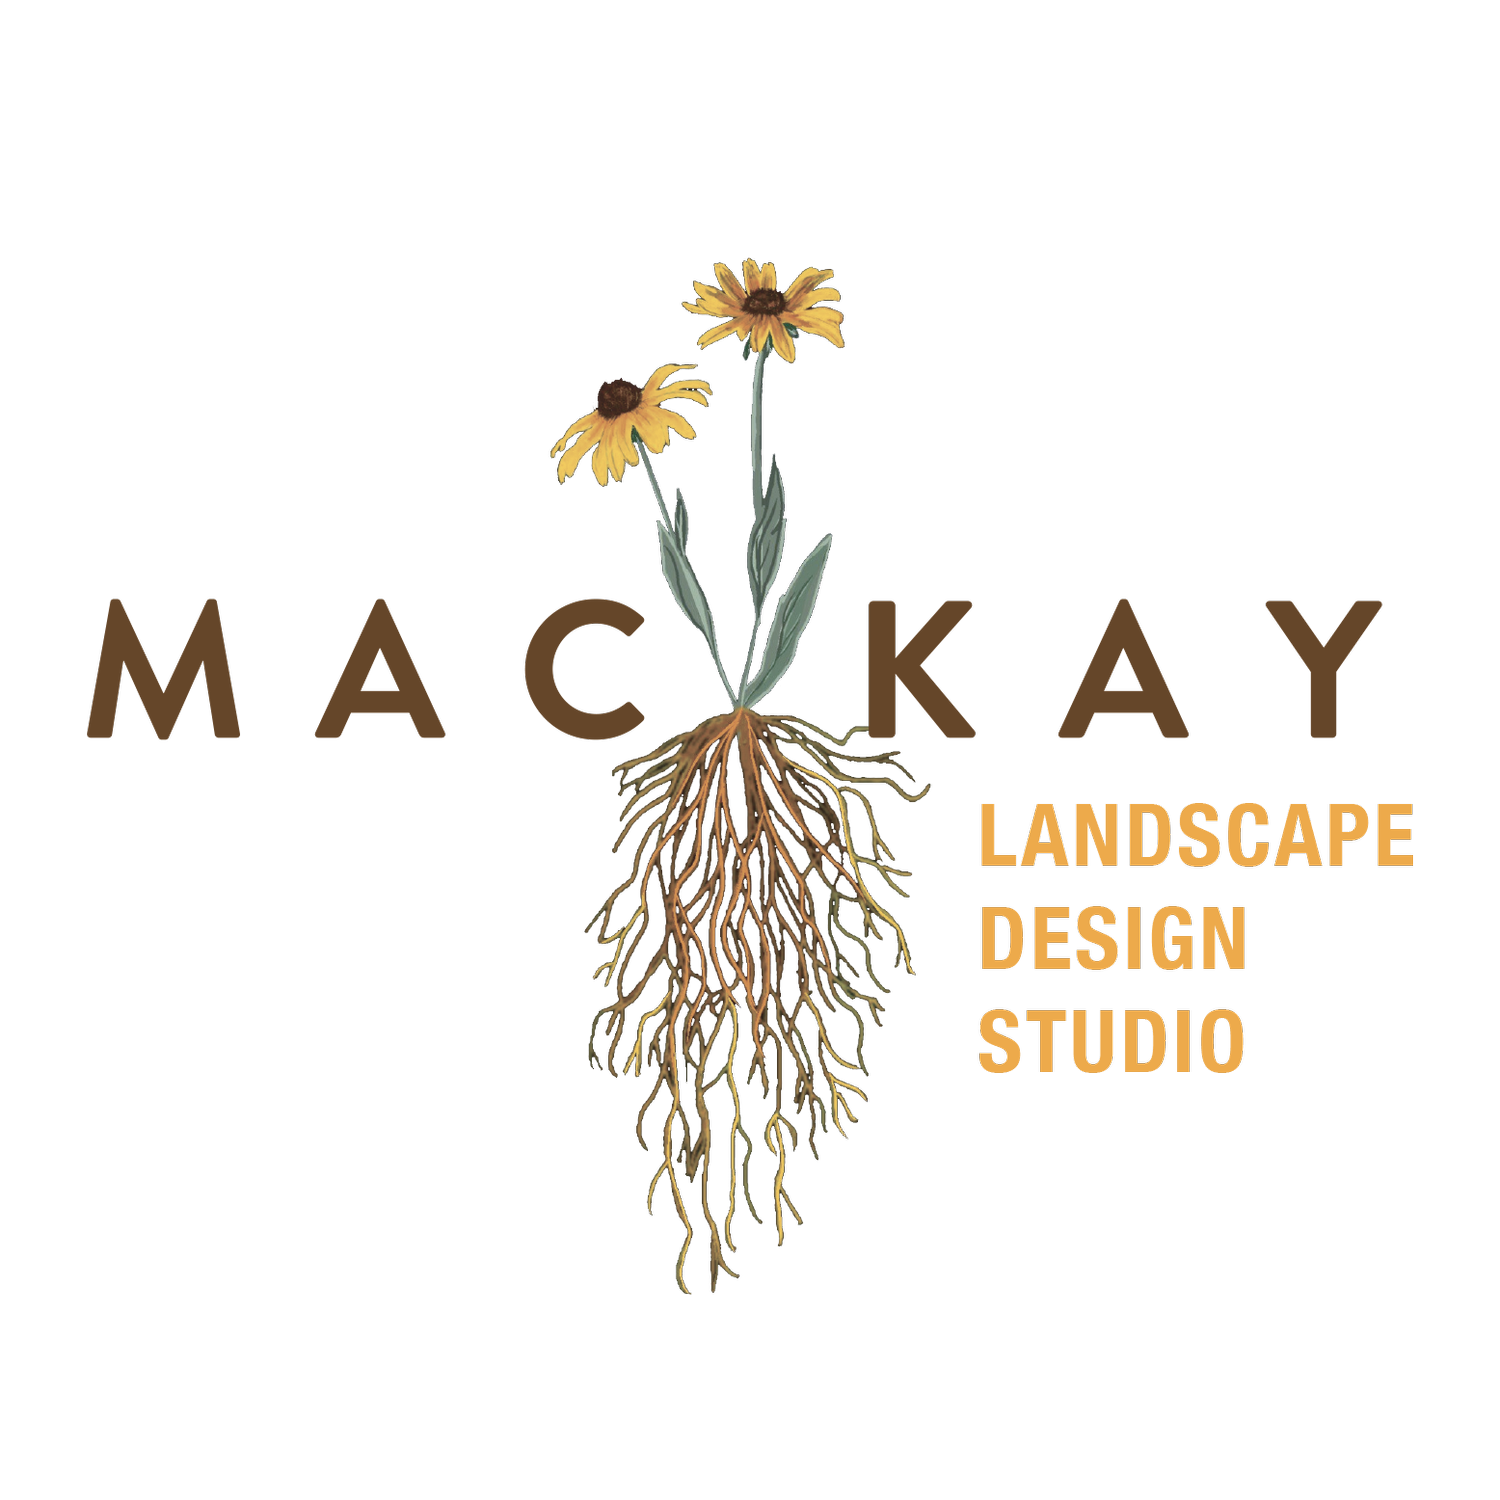 MacKay Landscape Design Studio